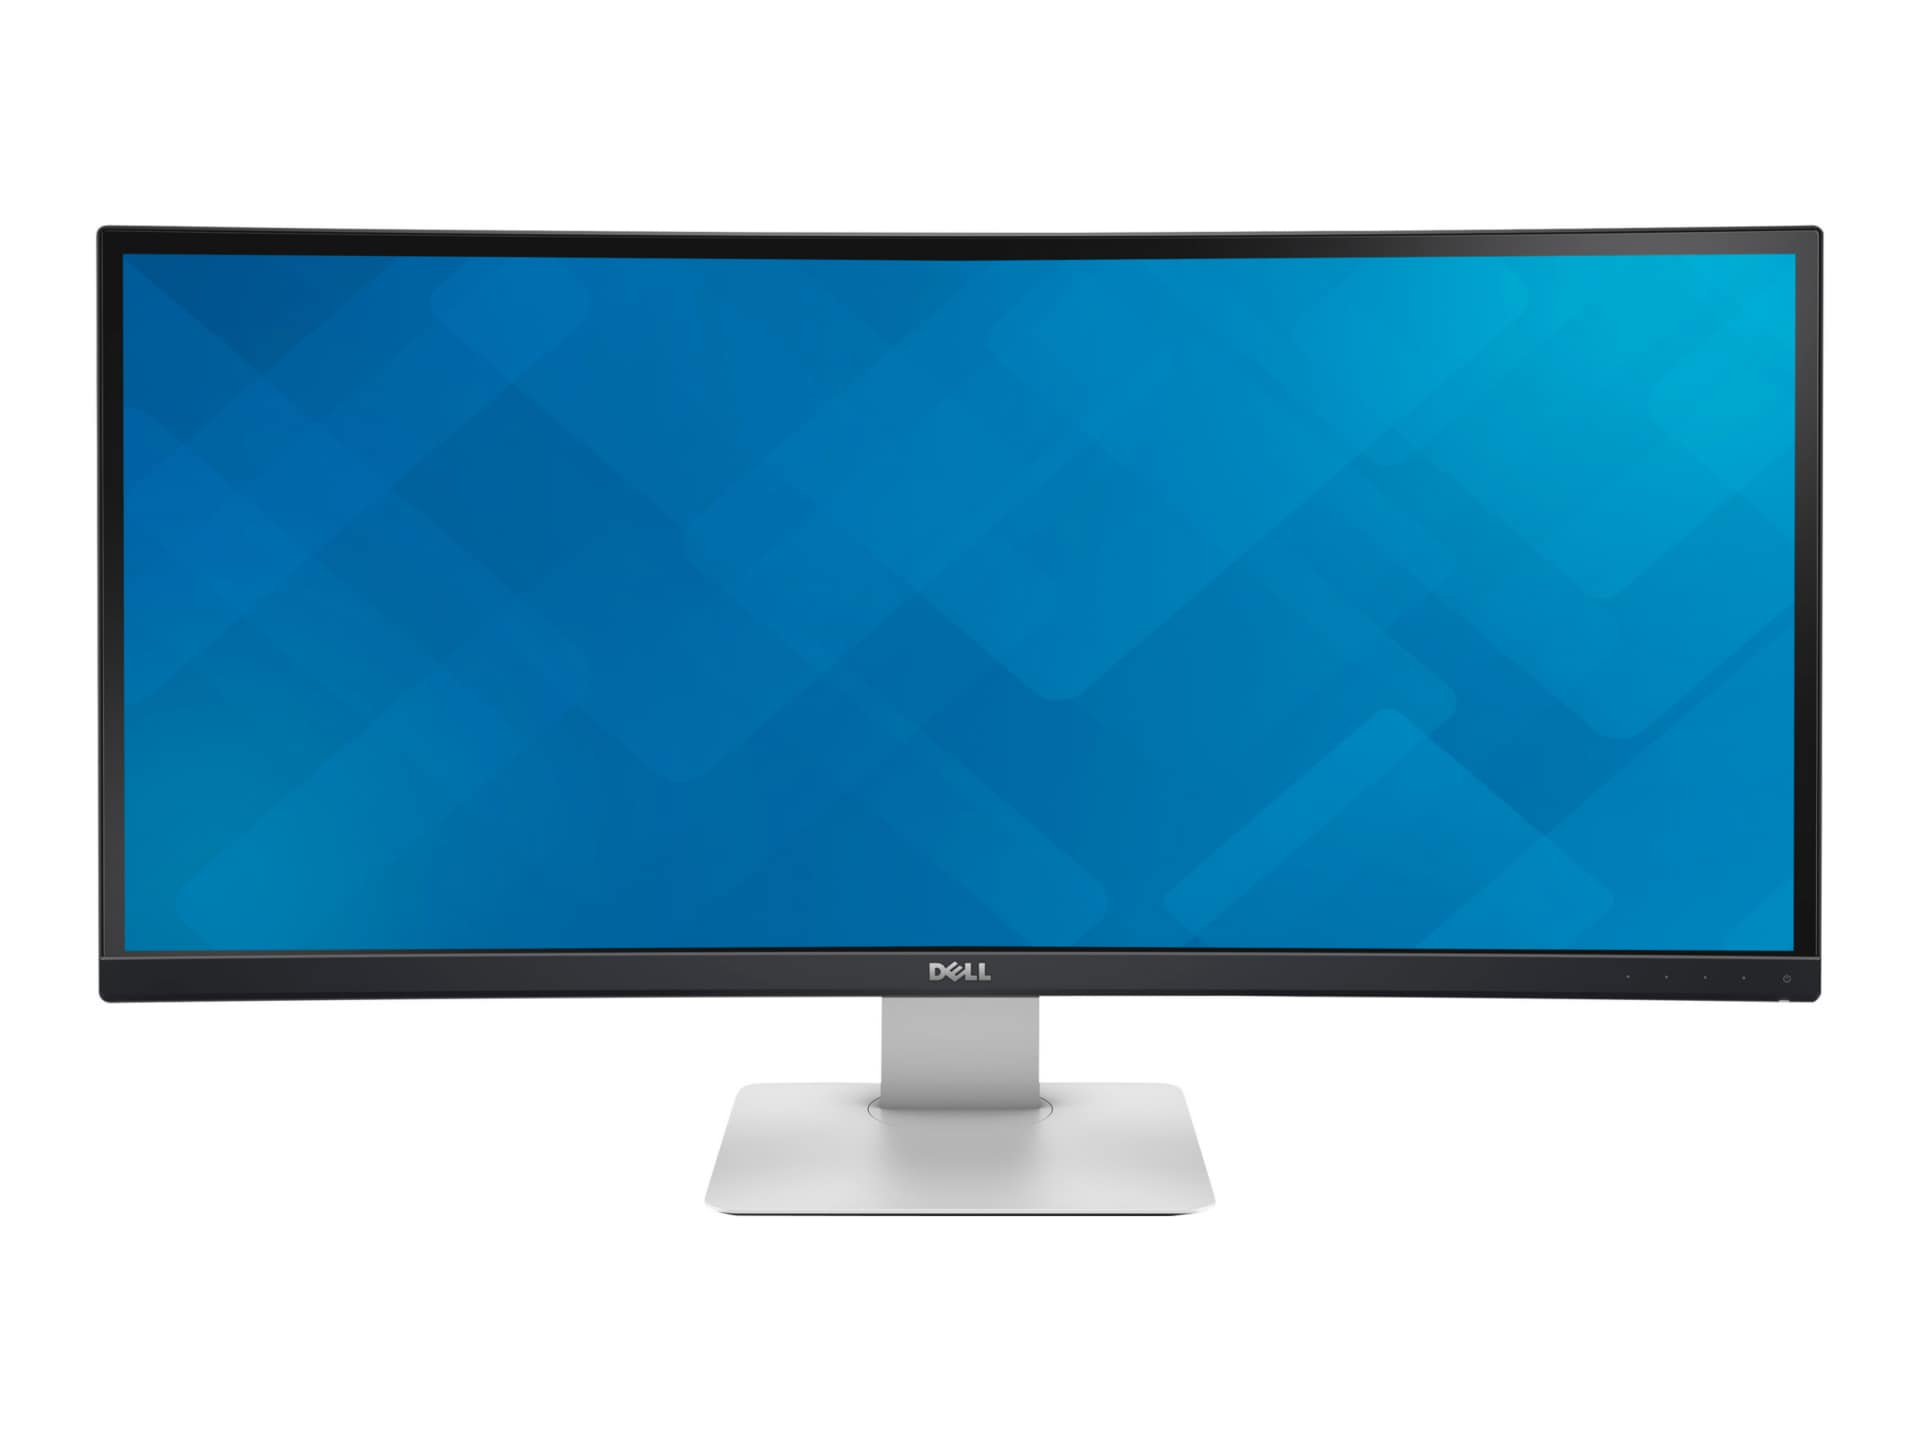 Dell UltraSharp U3415W - LED monitor - curved - 34.08"